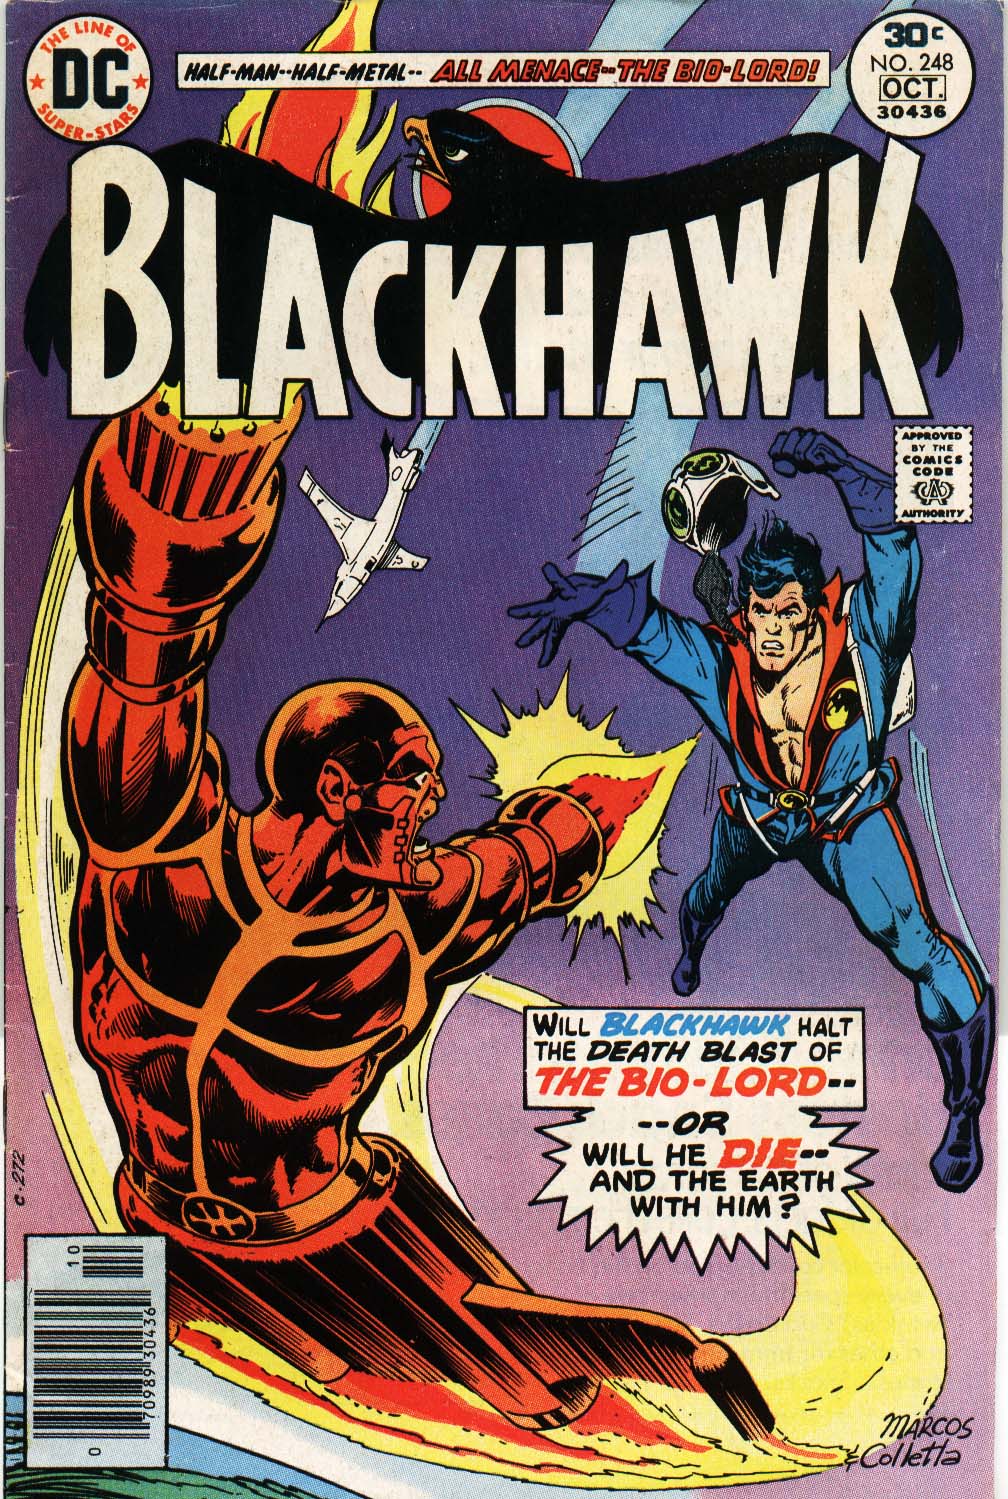 Blackhawk (1957) issue 248 - Page 1